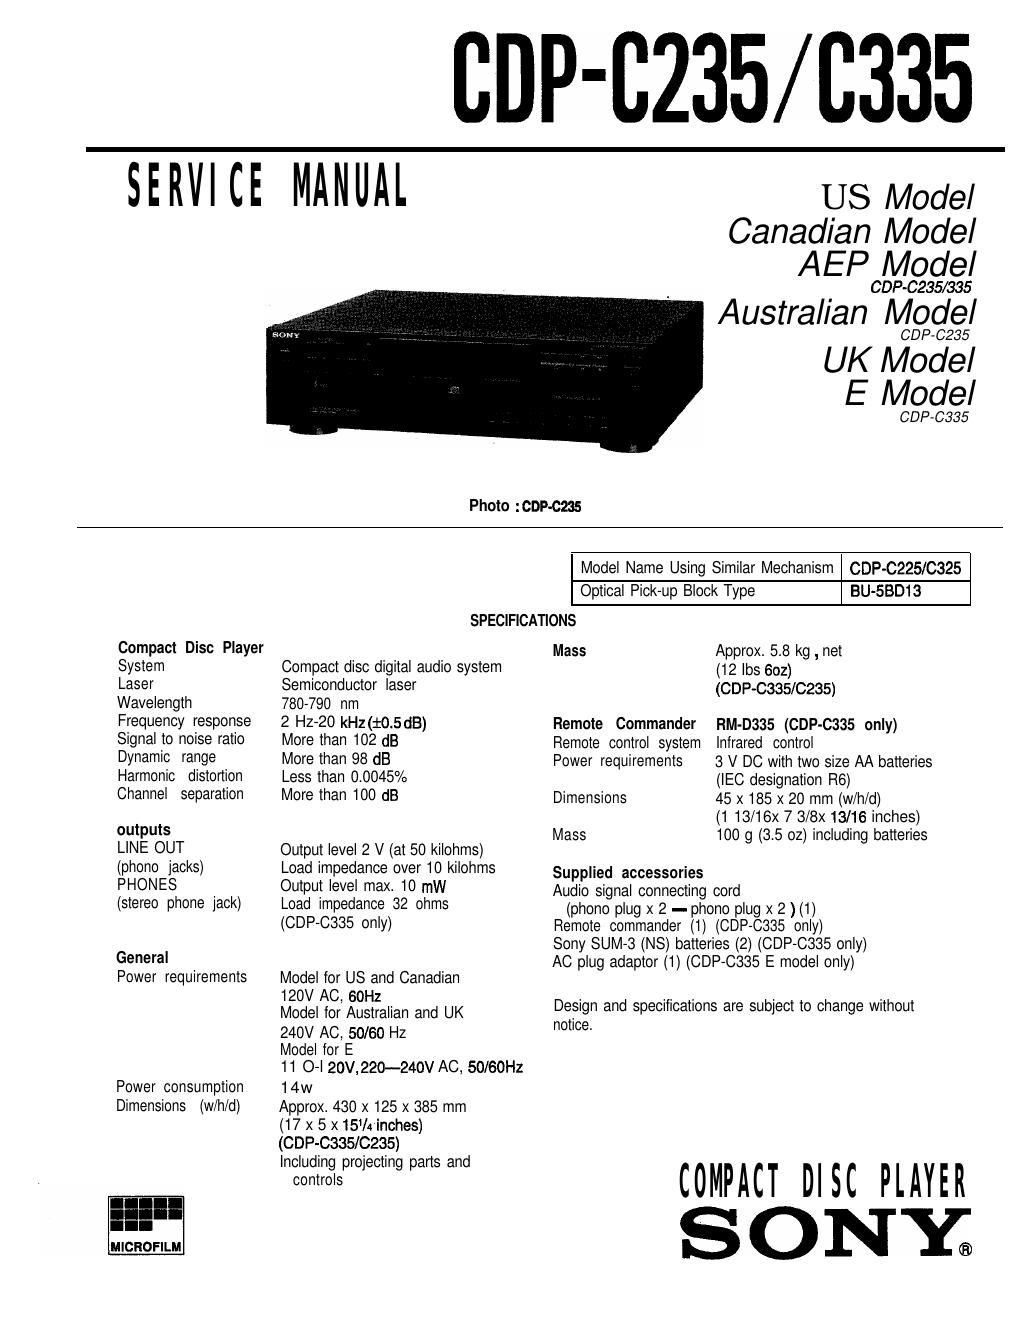 sony cdp c 235 service manual